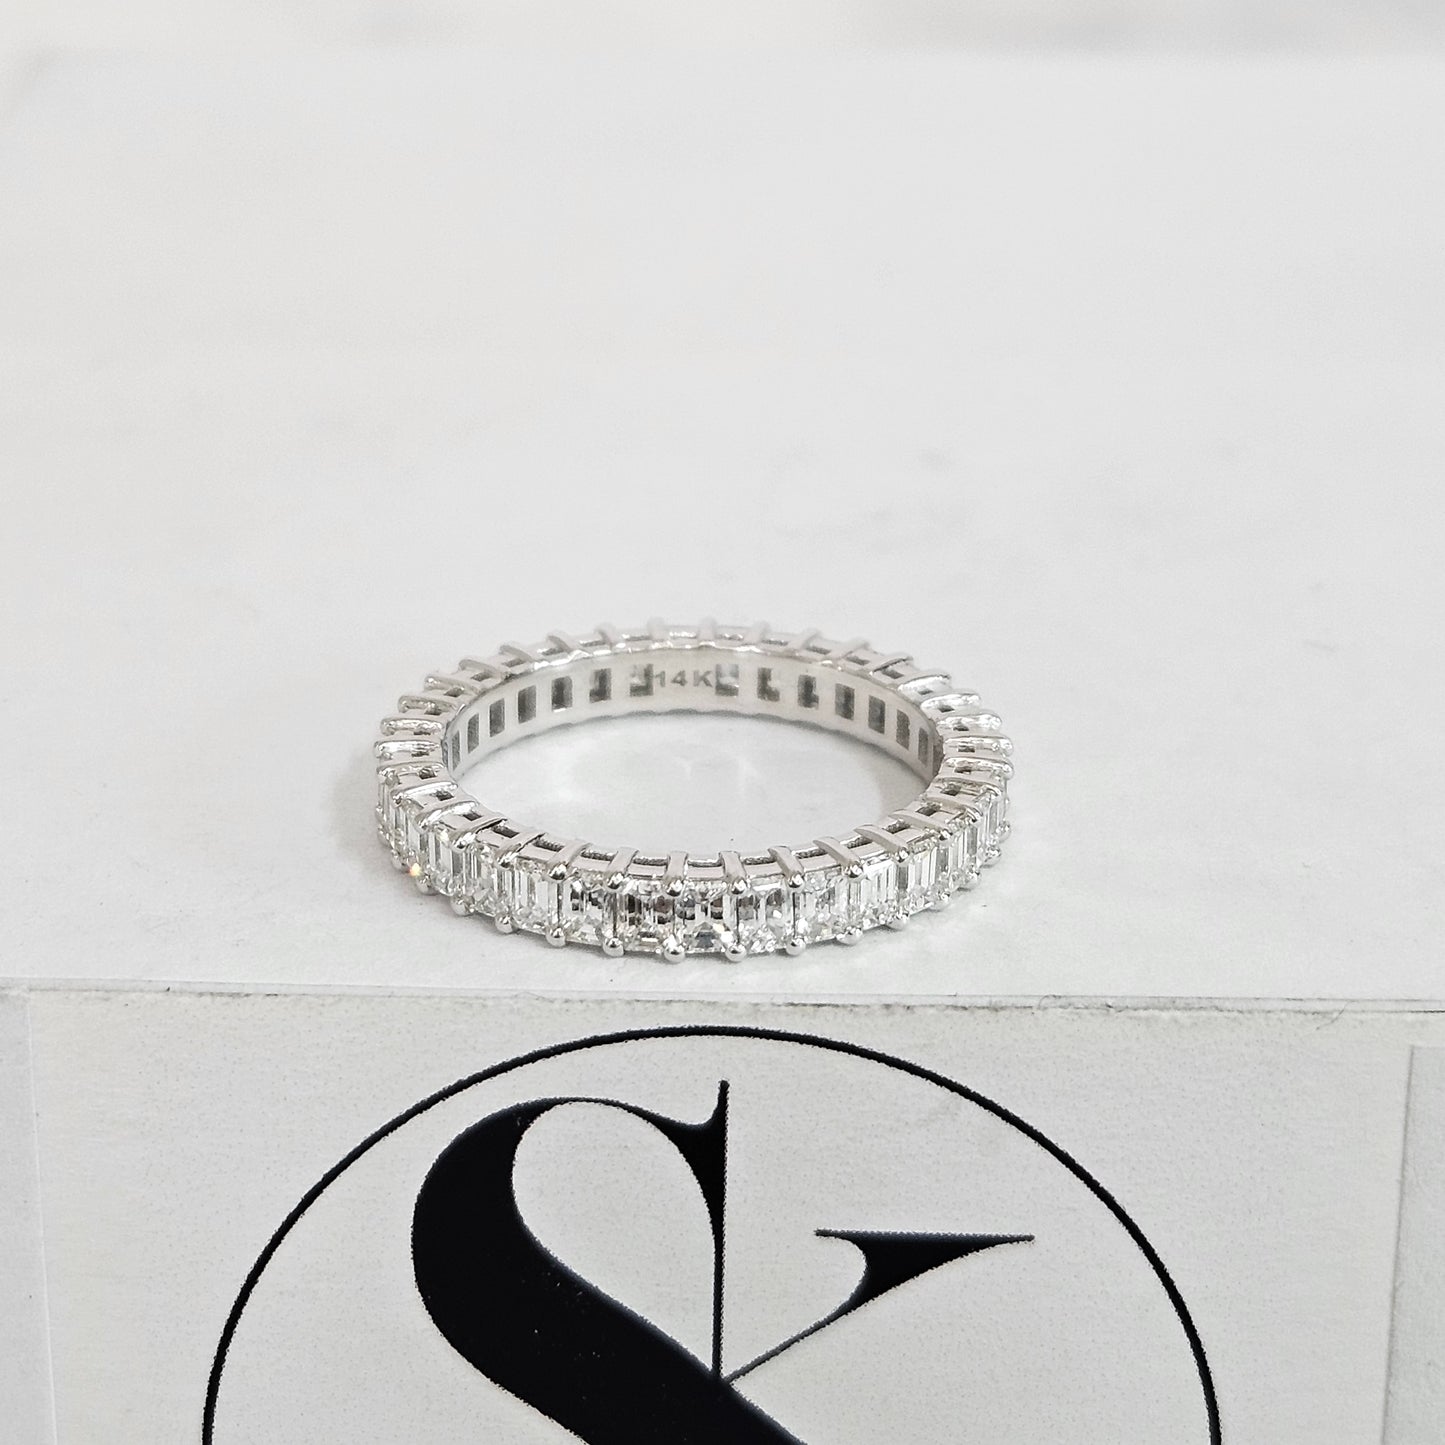 2ct Emerald Cut Diamond Band / Full Eternity Natural Diamond Wedding Ring / Stackable Emerald Cut Diamond Band / Anniversary gift